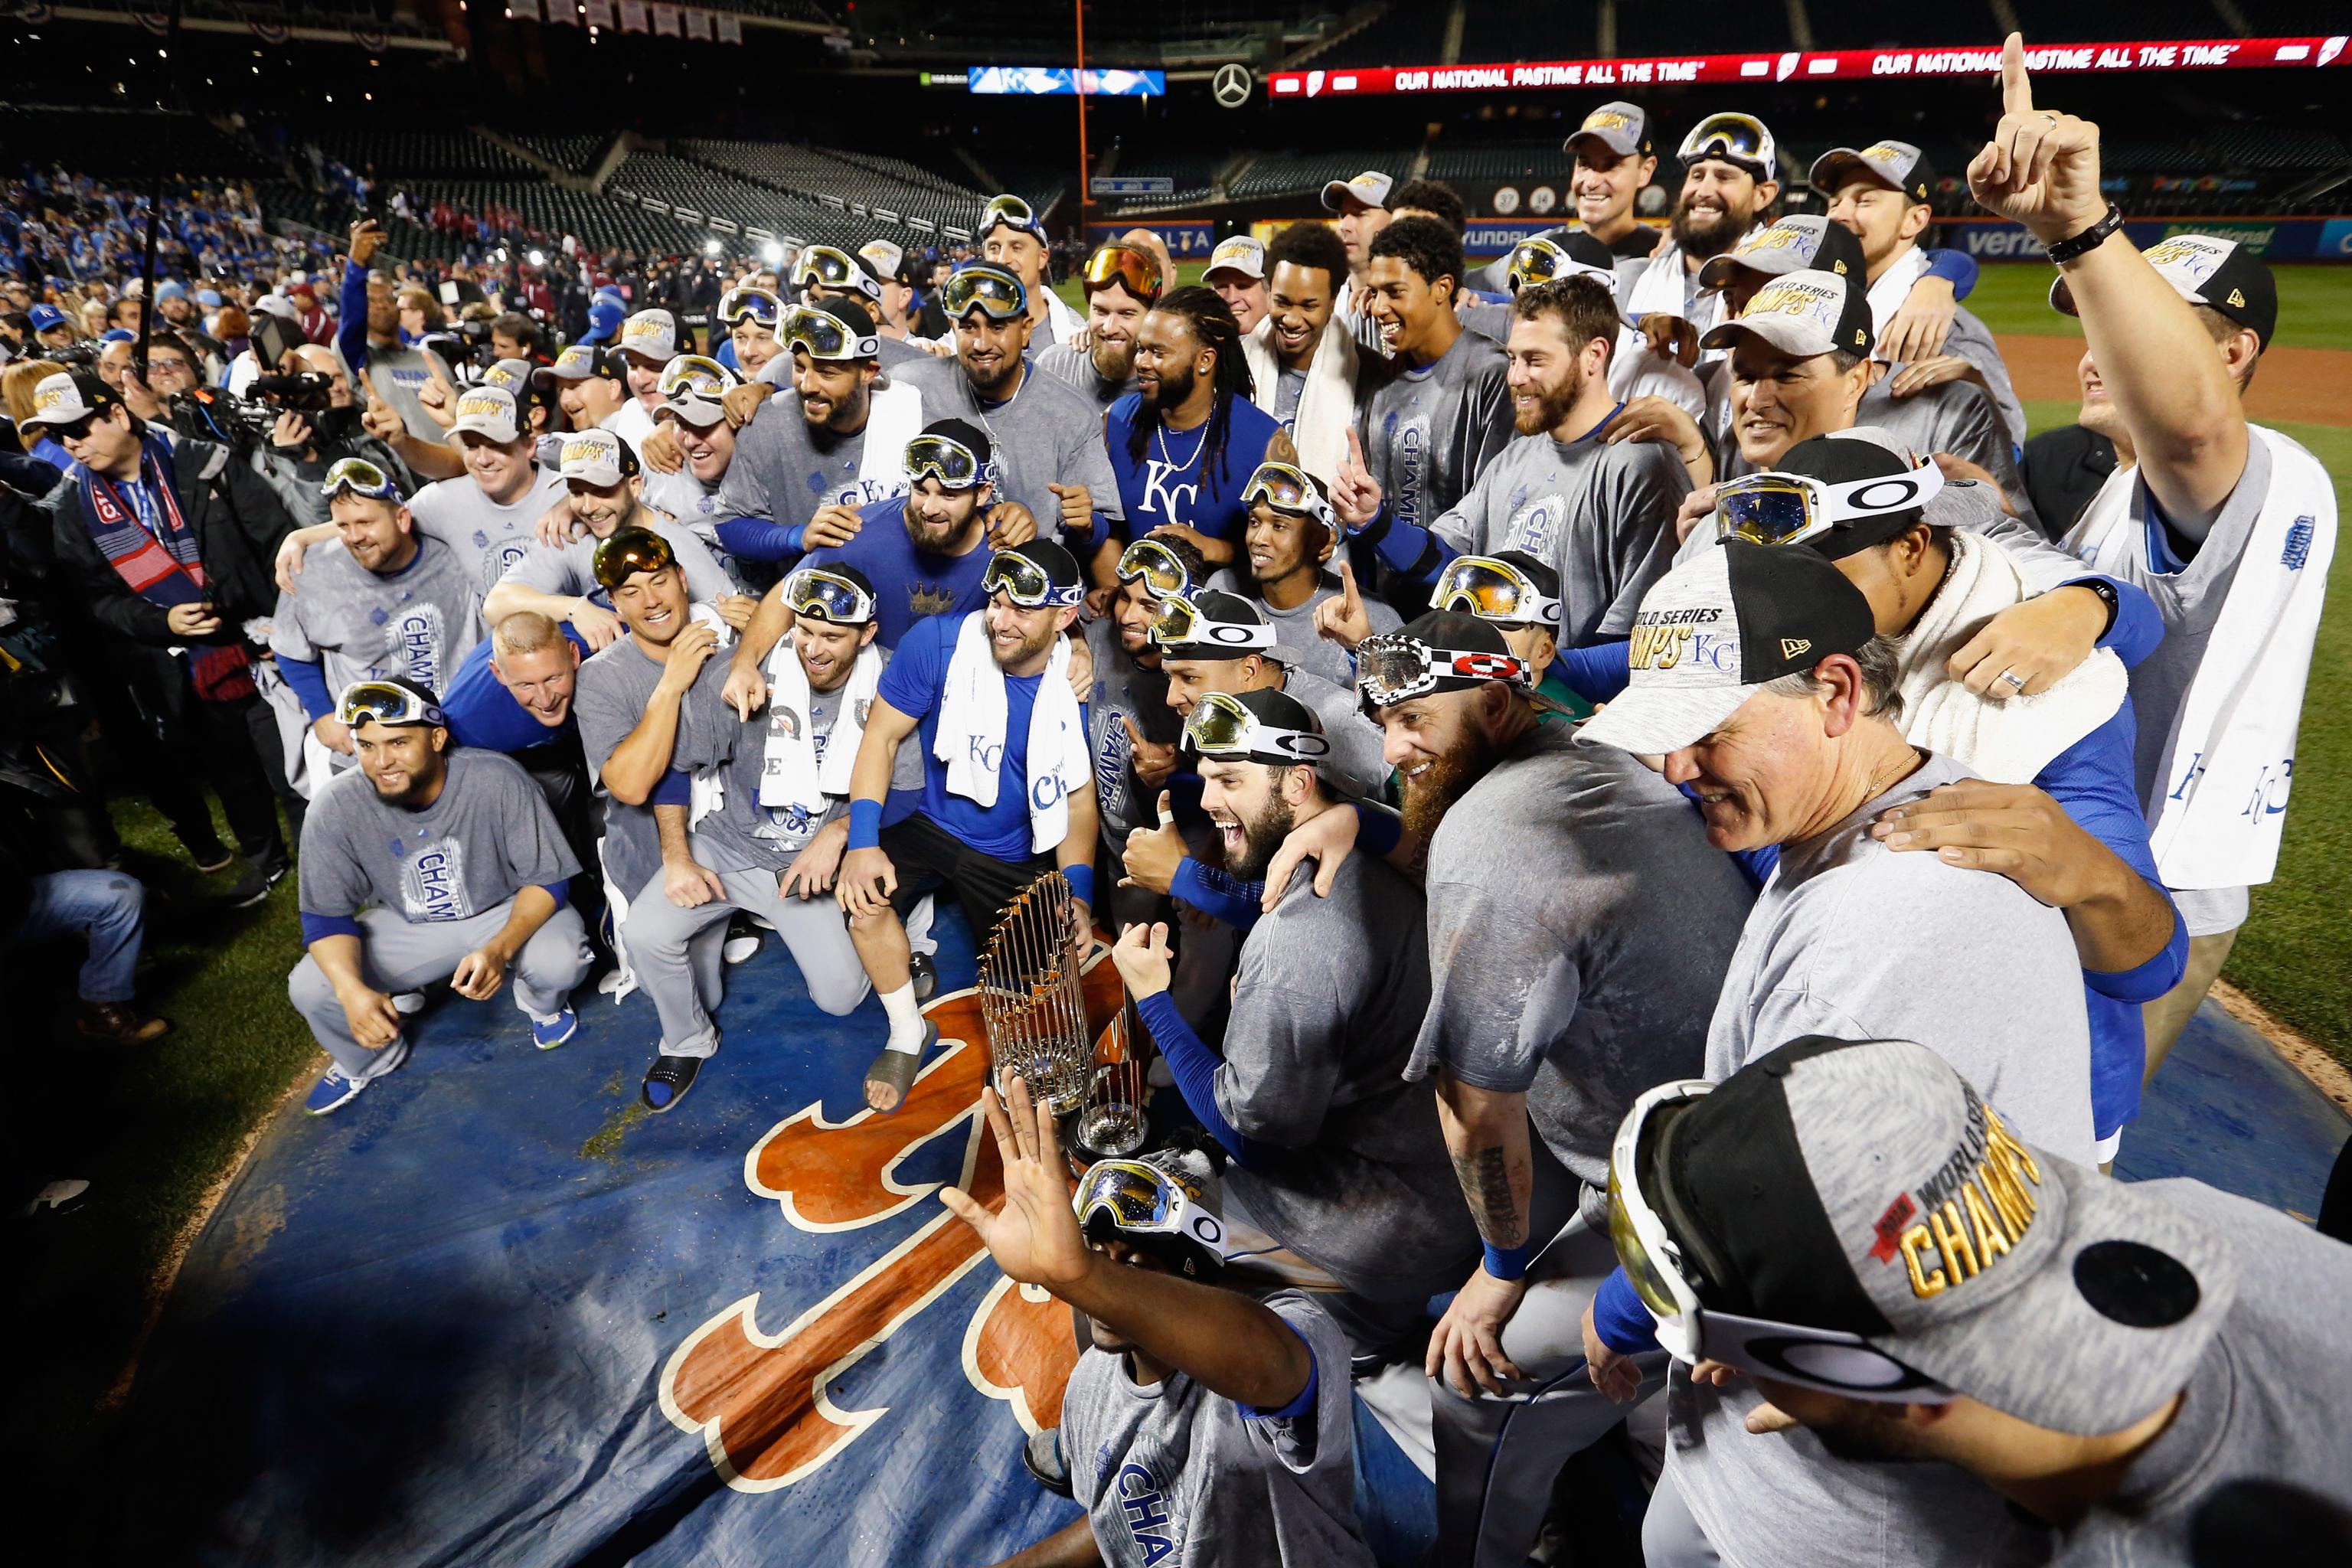 Kansas City Royals on late season surge, beat Astros: recap